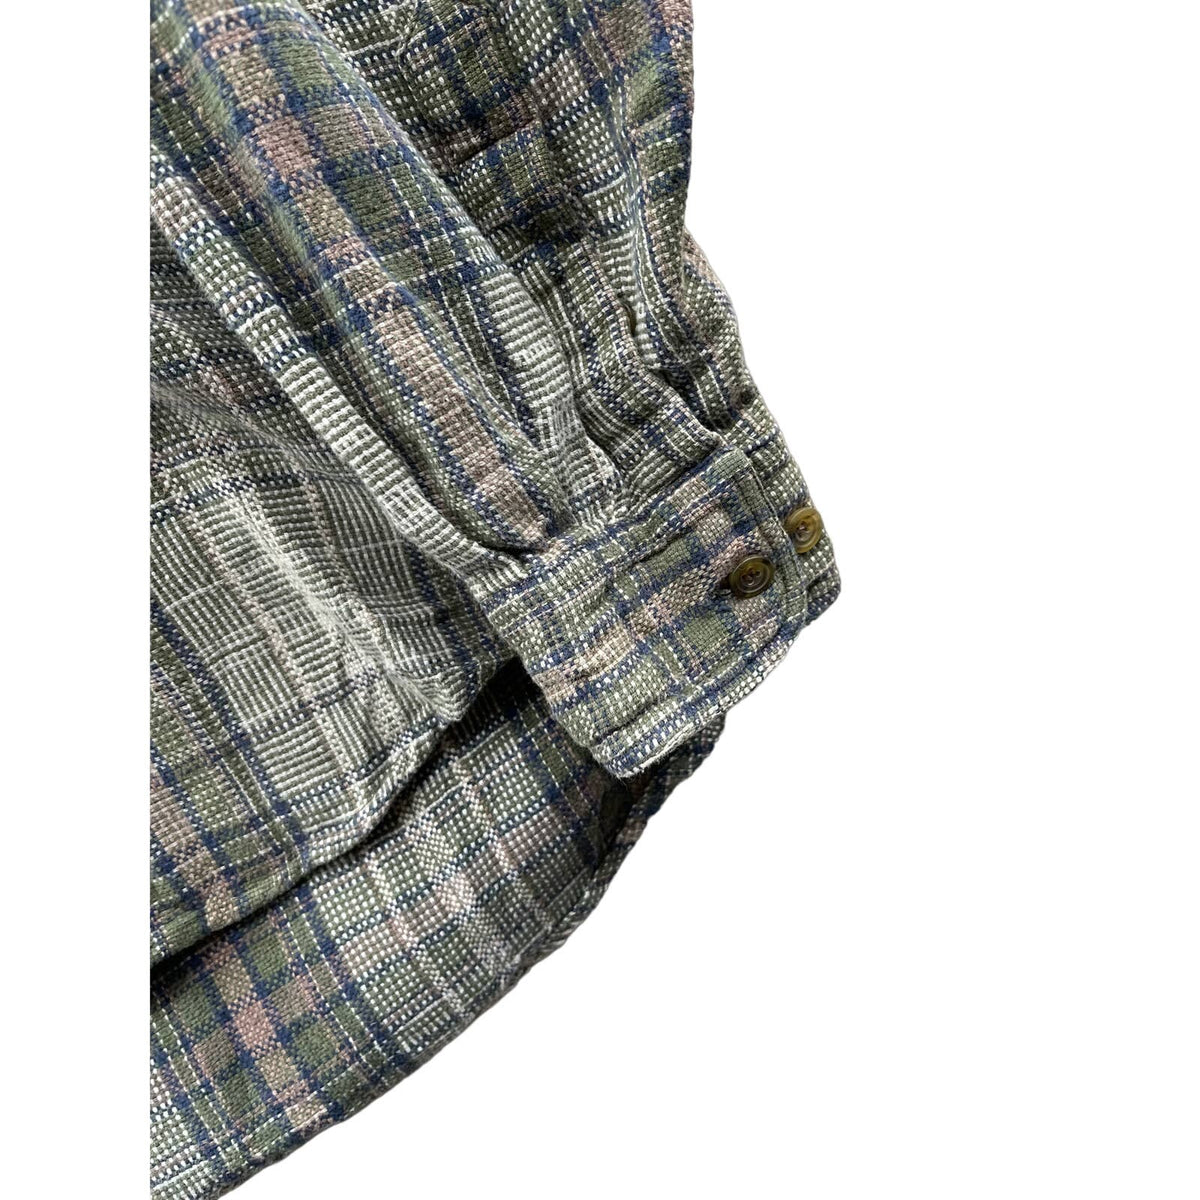 Vintage Woolrich Men's Green Outdoor Flannel Button Down L/S Shirt